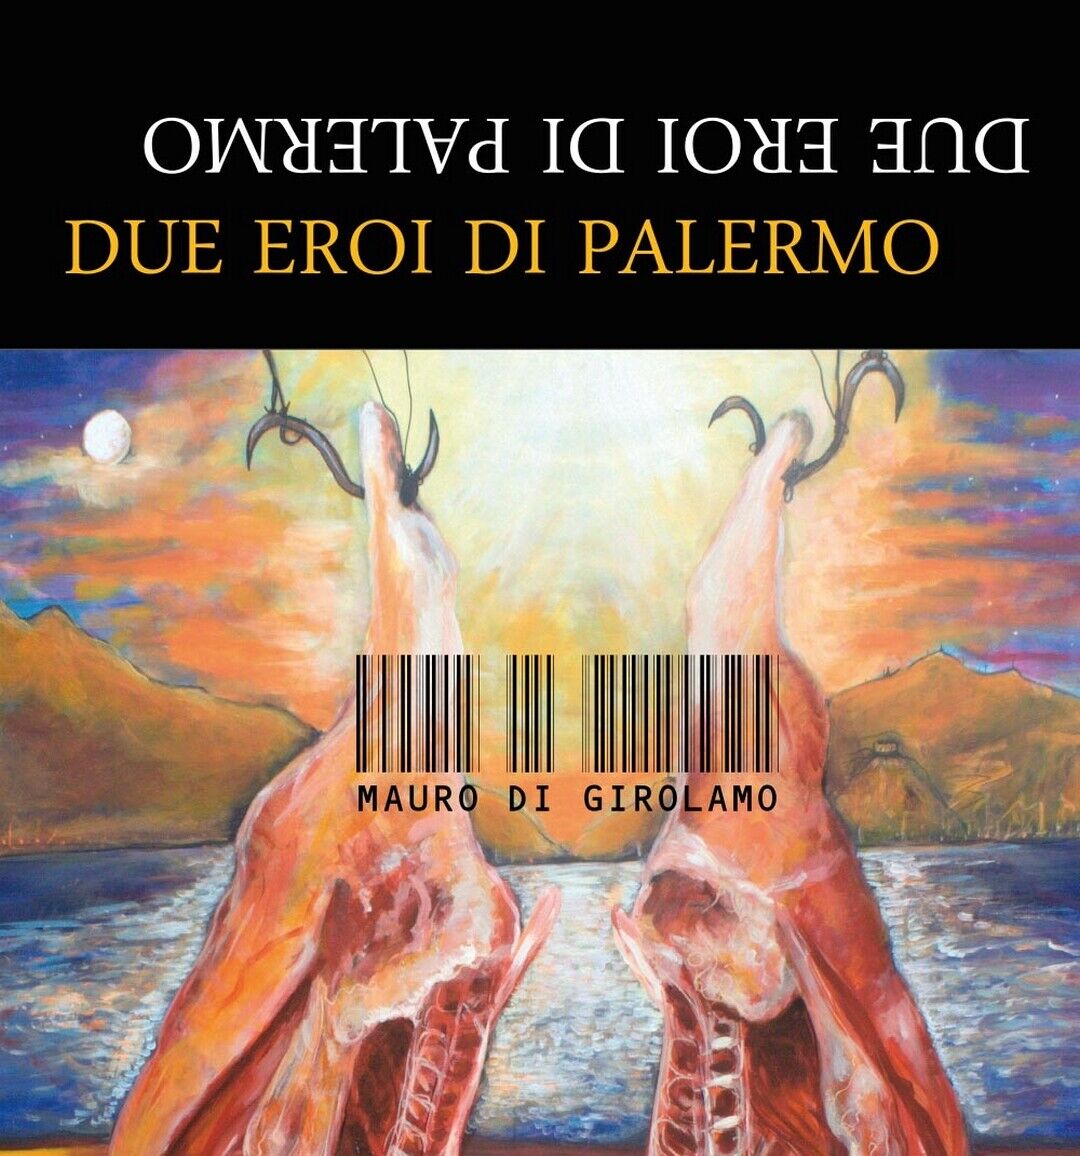 Due Eroi di Palermo  di Mauro Di Girolamo,  2016,  Youcanprint